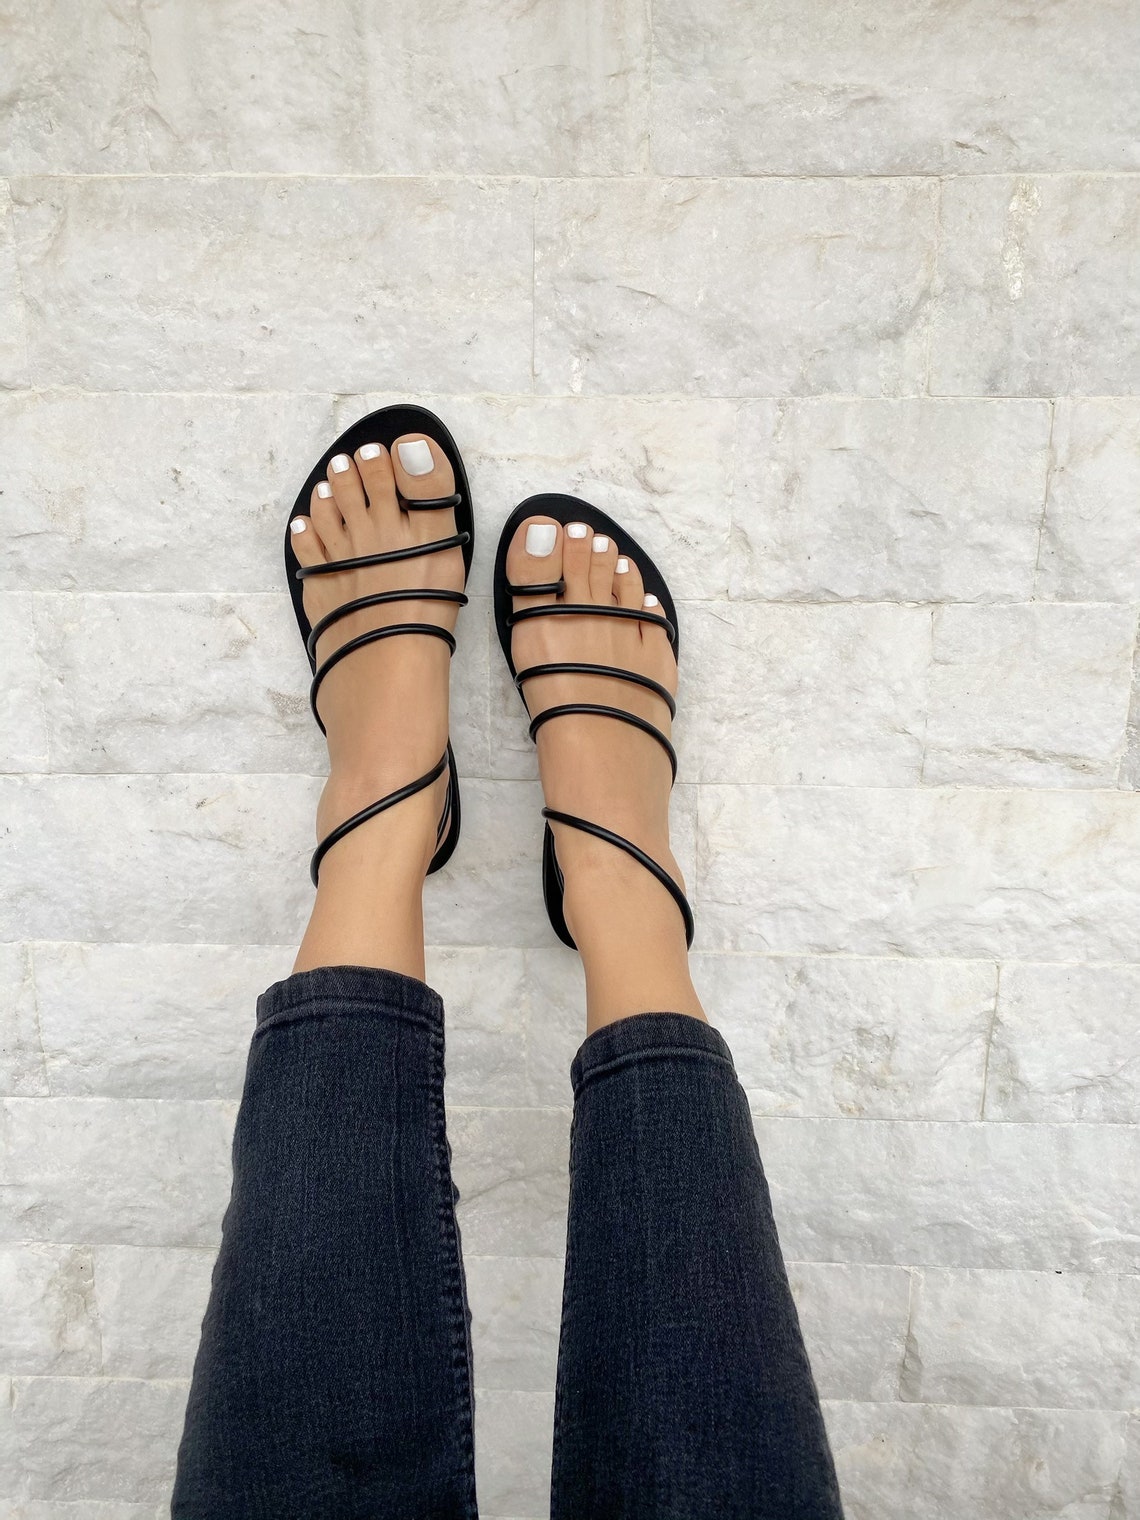 Minimal Strappy Sandals Greek Sandals Leather Sandals | Etsy